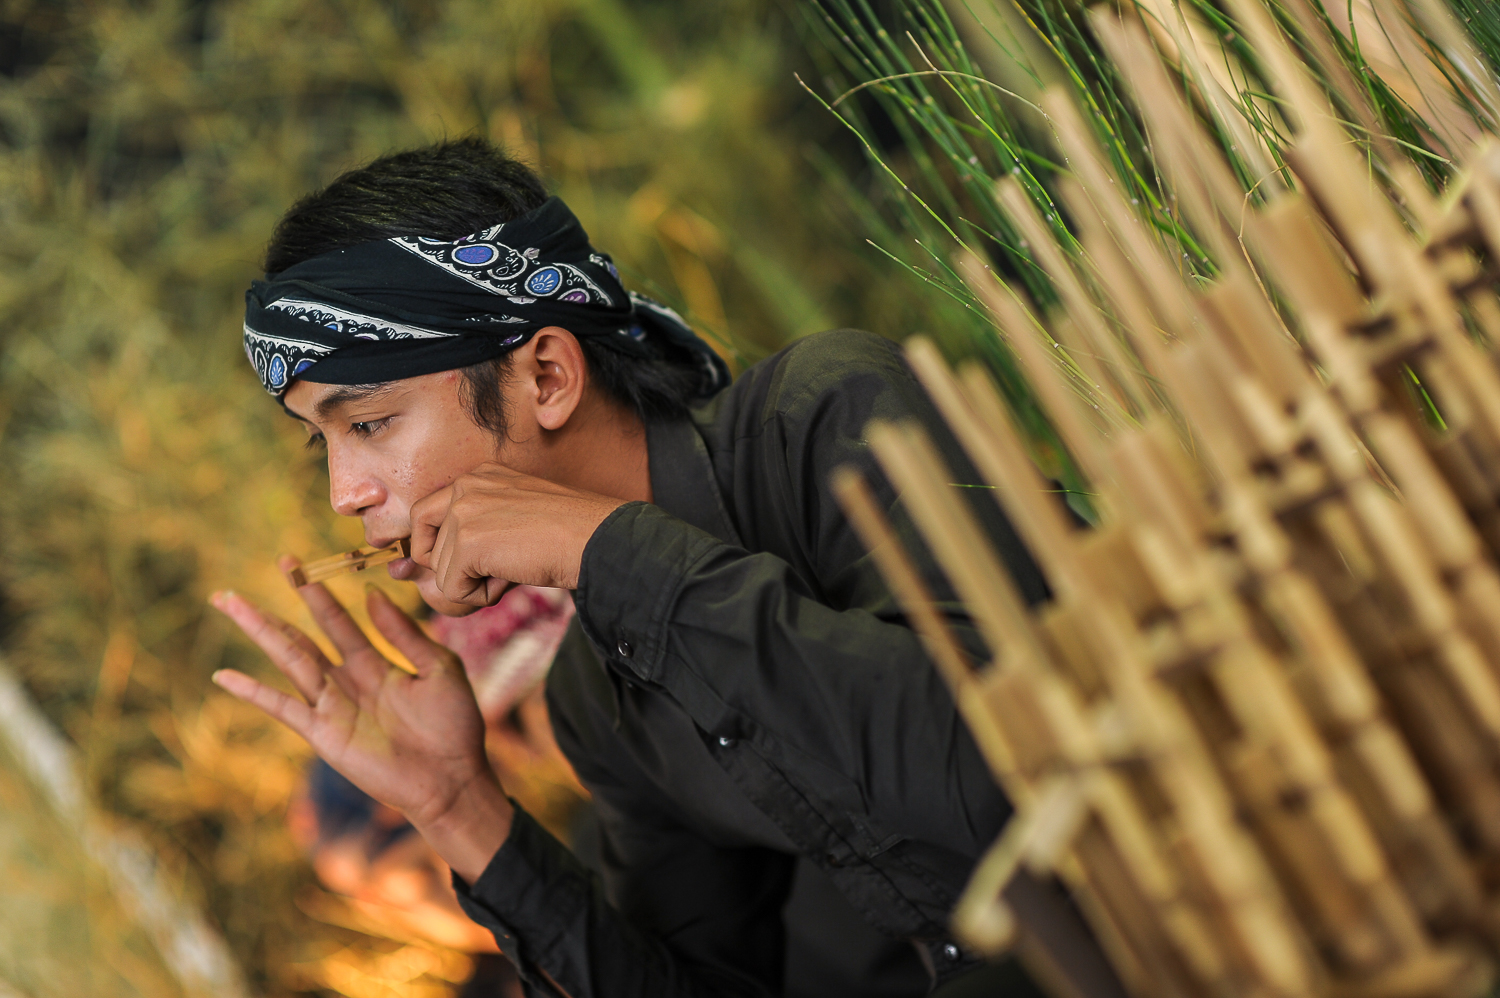 Terdapat filosofi dalam alat musik tradisional Karinding | Foto: PesonaIndonesia